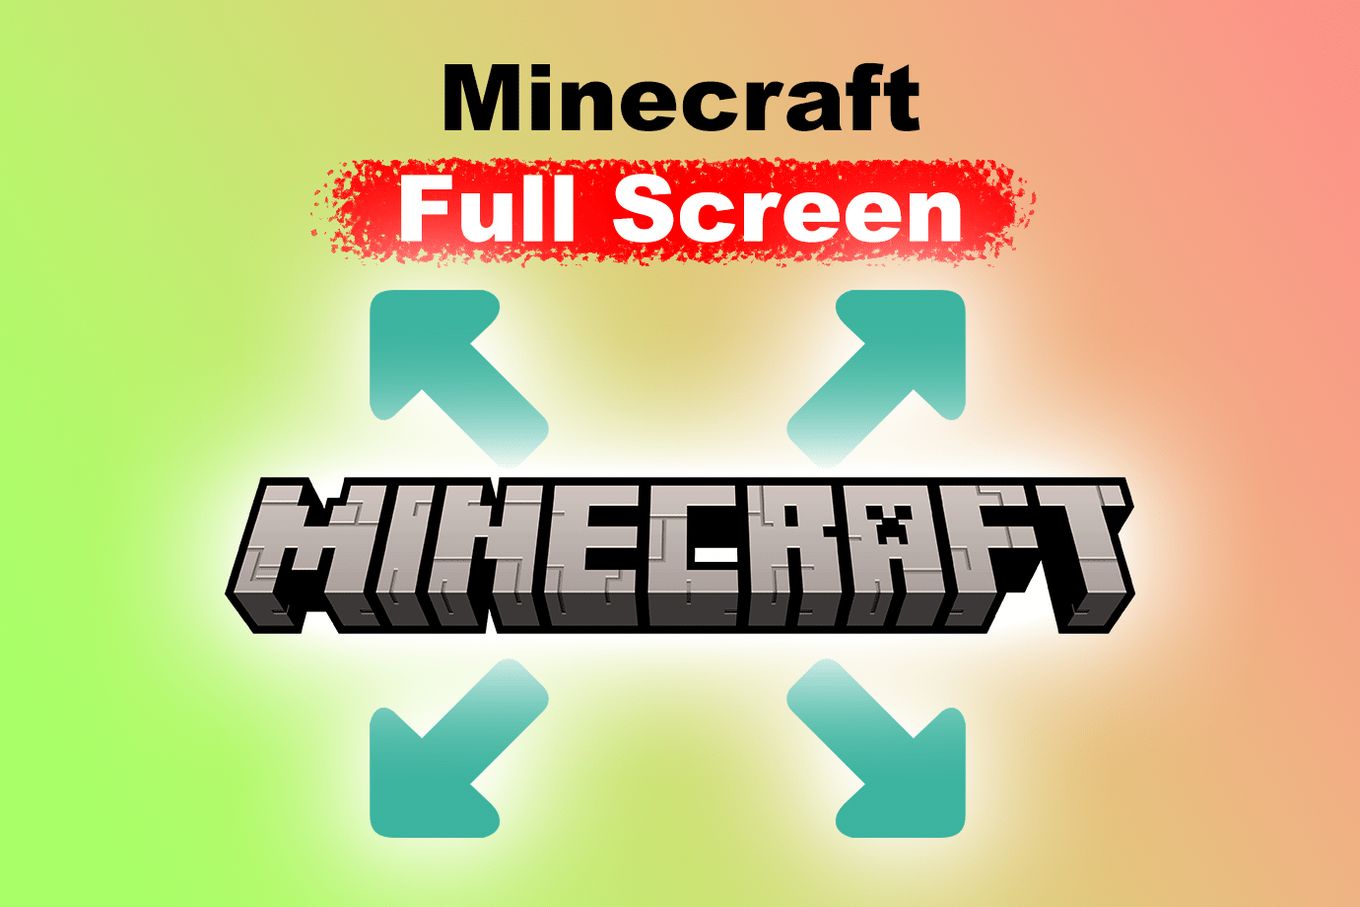 Minecraft Full Screen Mode